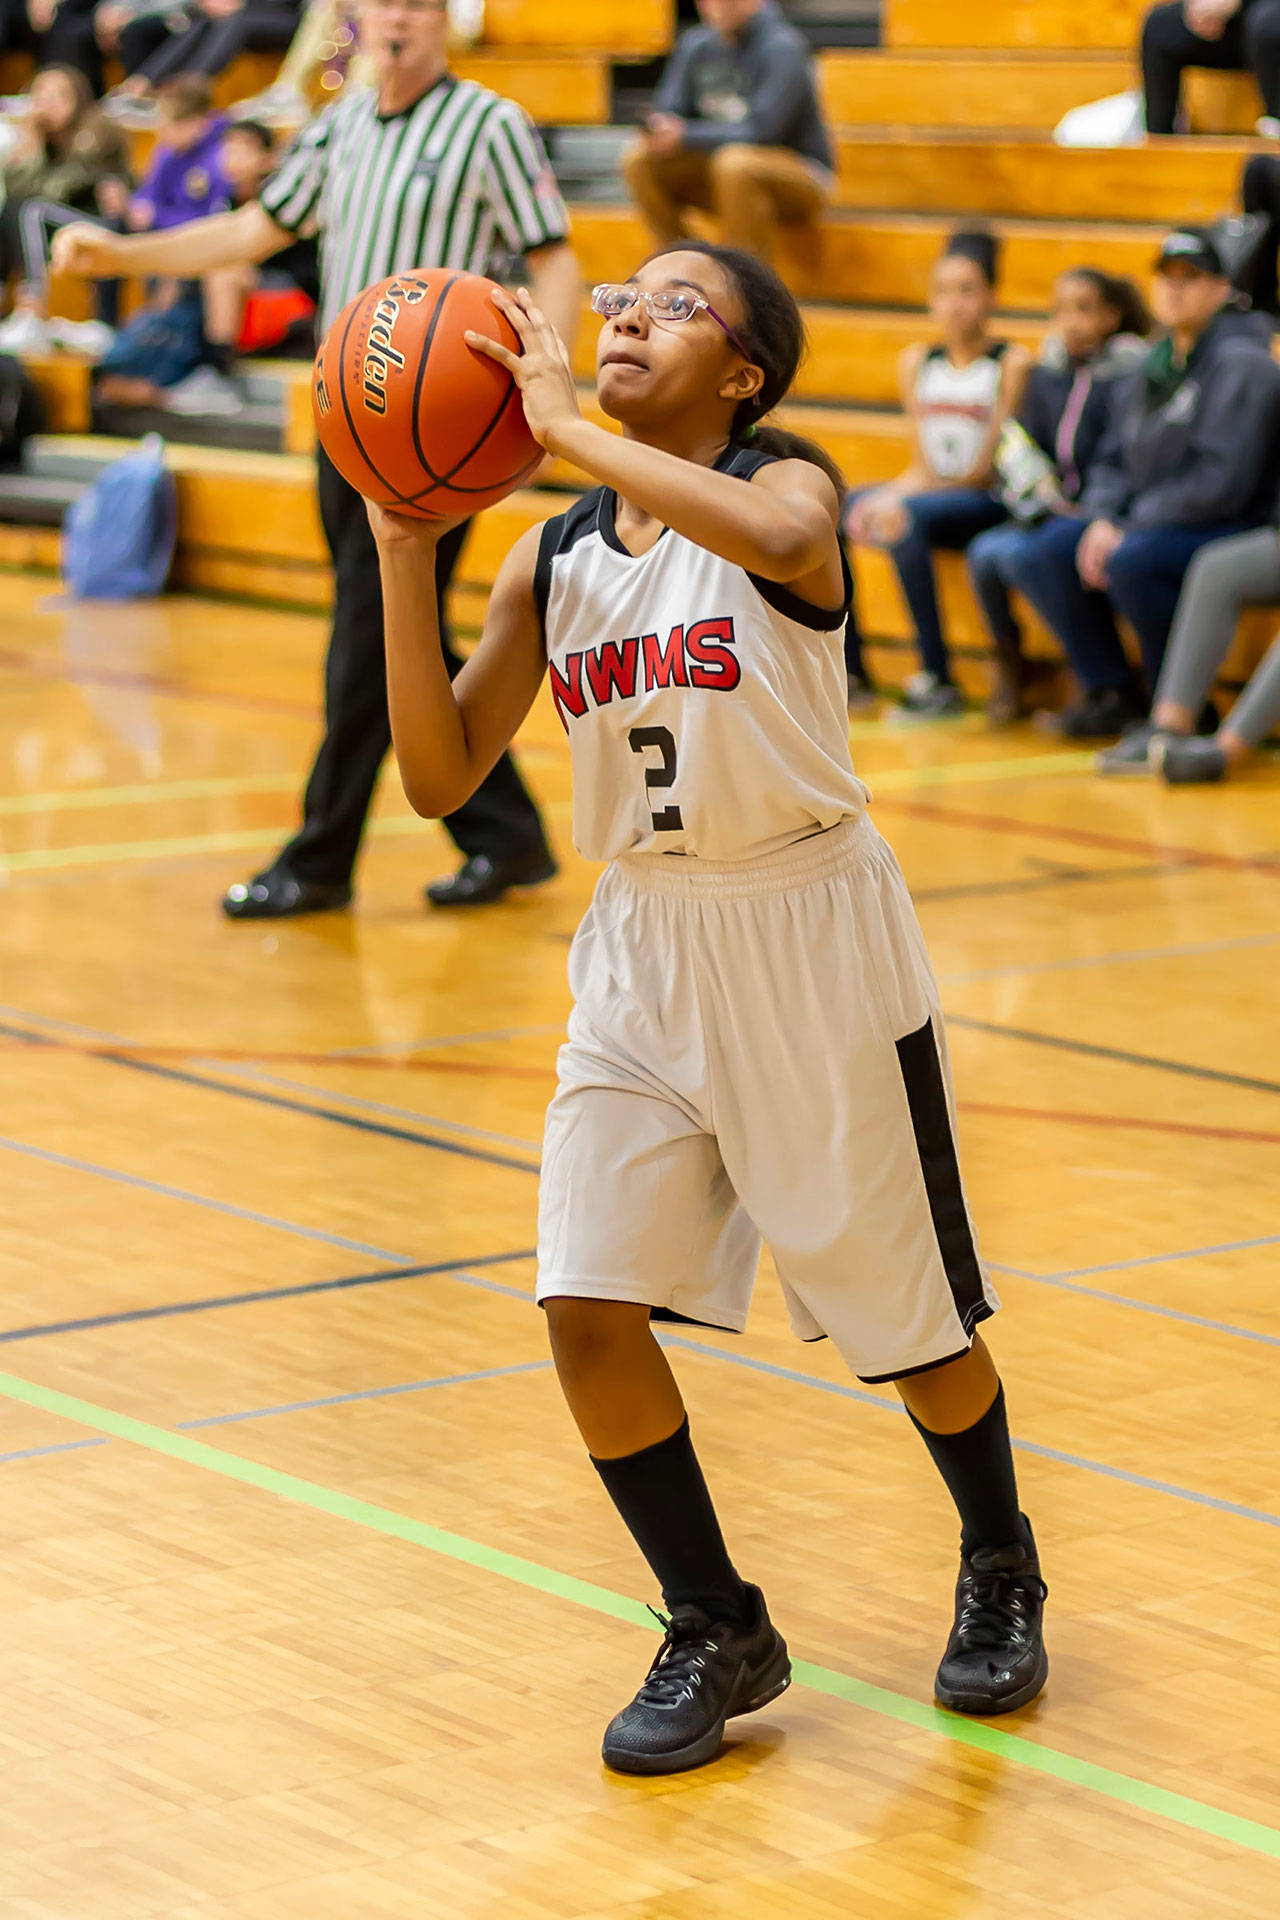 Seventh-grader Ayannah Garcia takes aim at the hoop. (Photo by John Fisken)